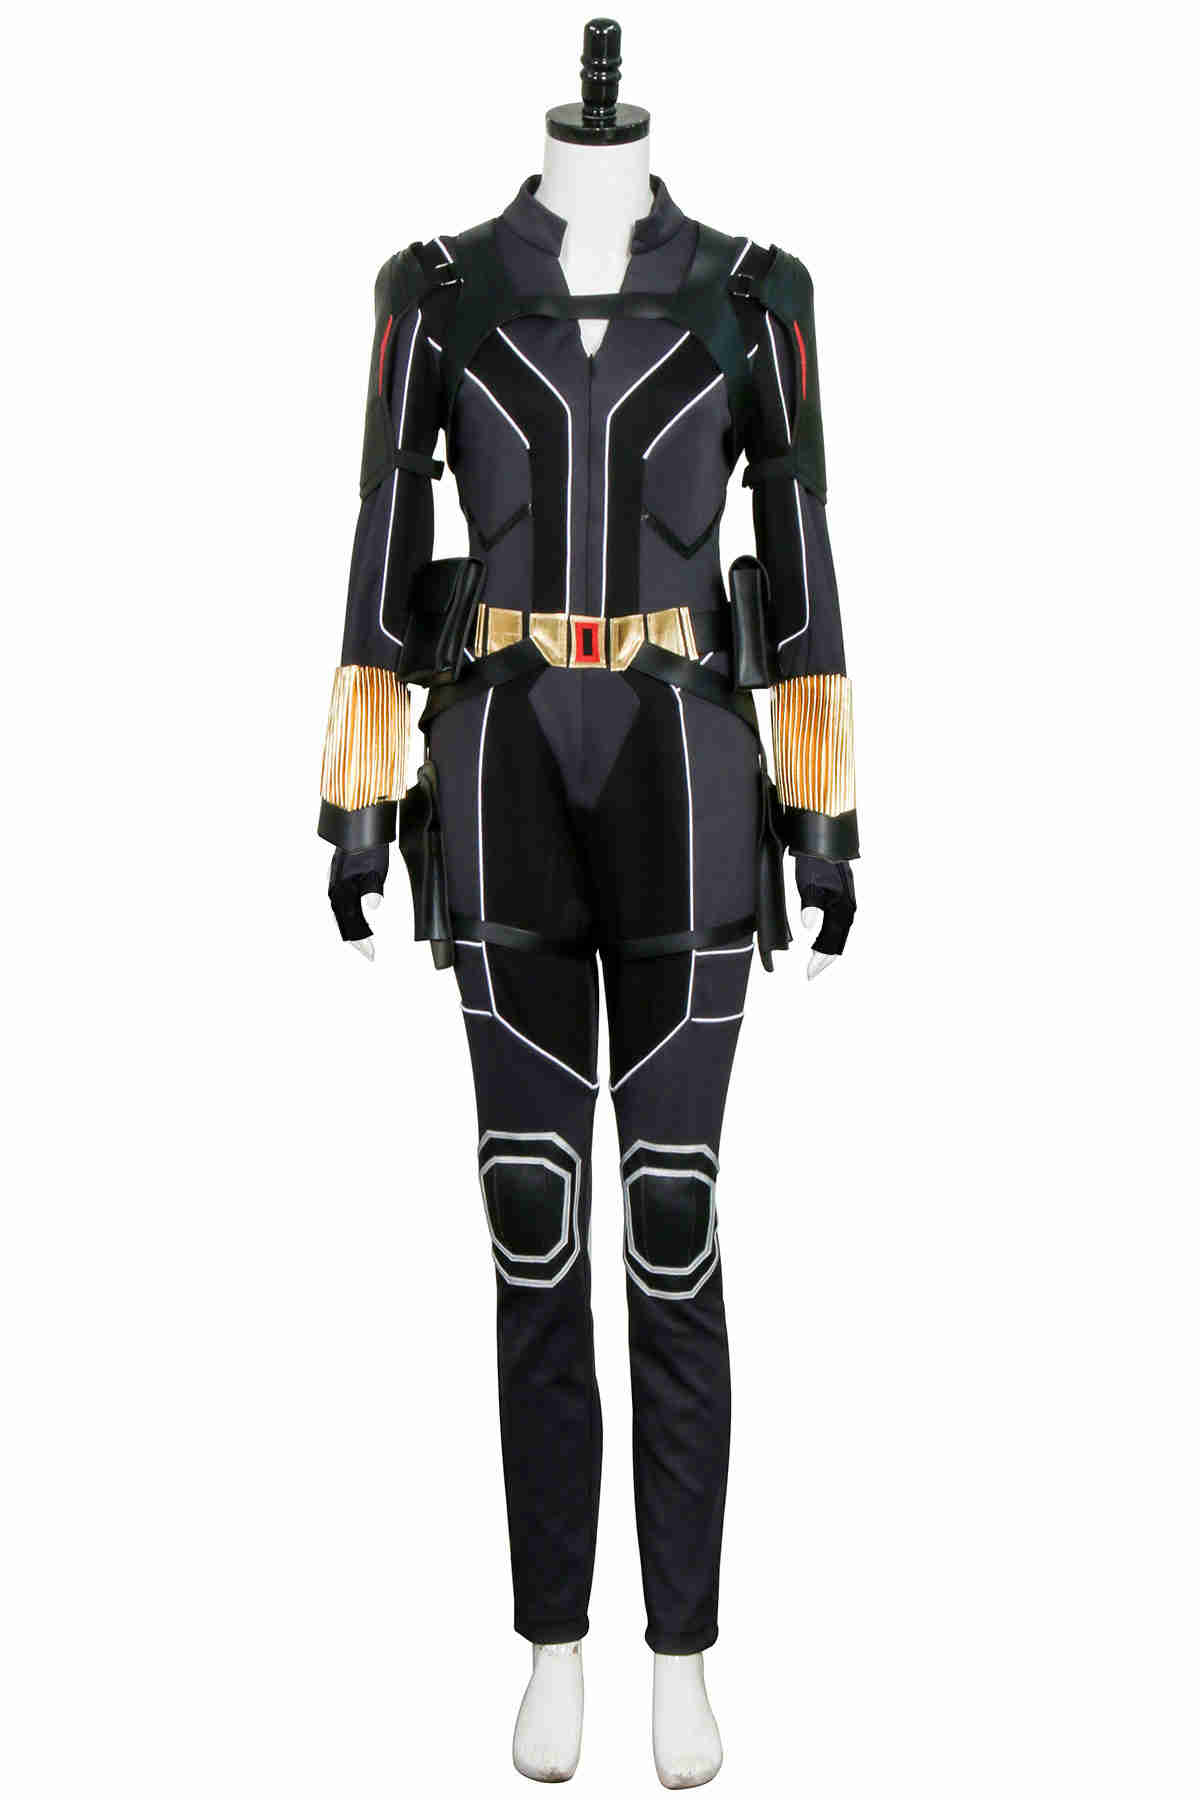 2020 Movie Black Widow Outfit Natasha Romanoff Sumpsuit super héroe cosplay traje